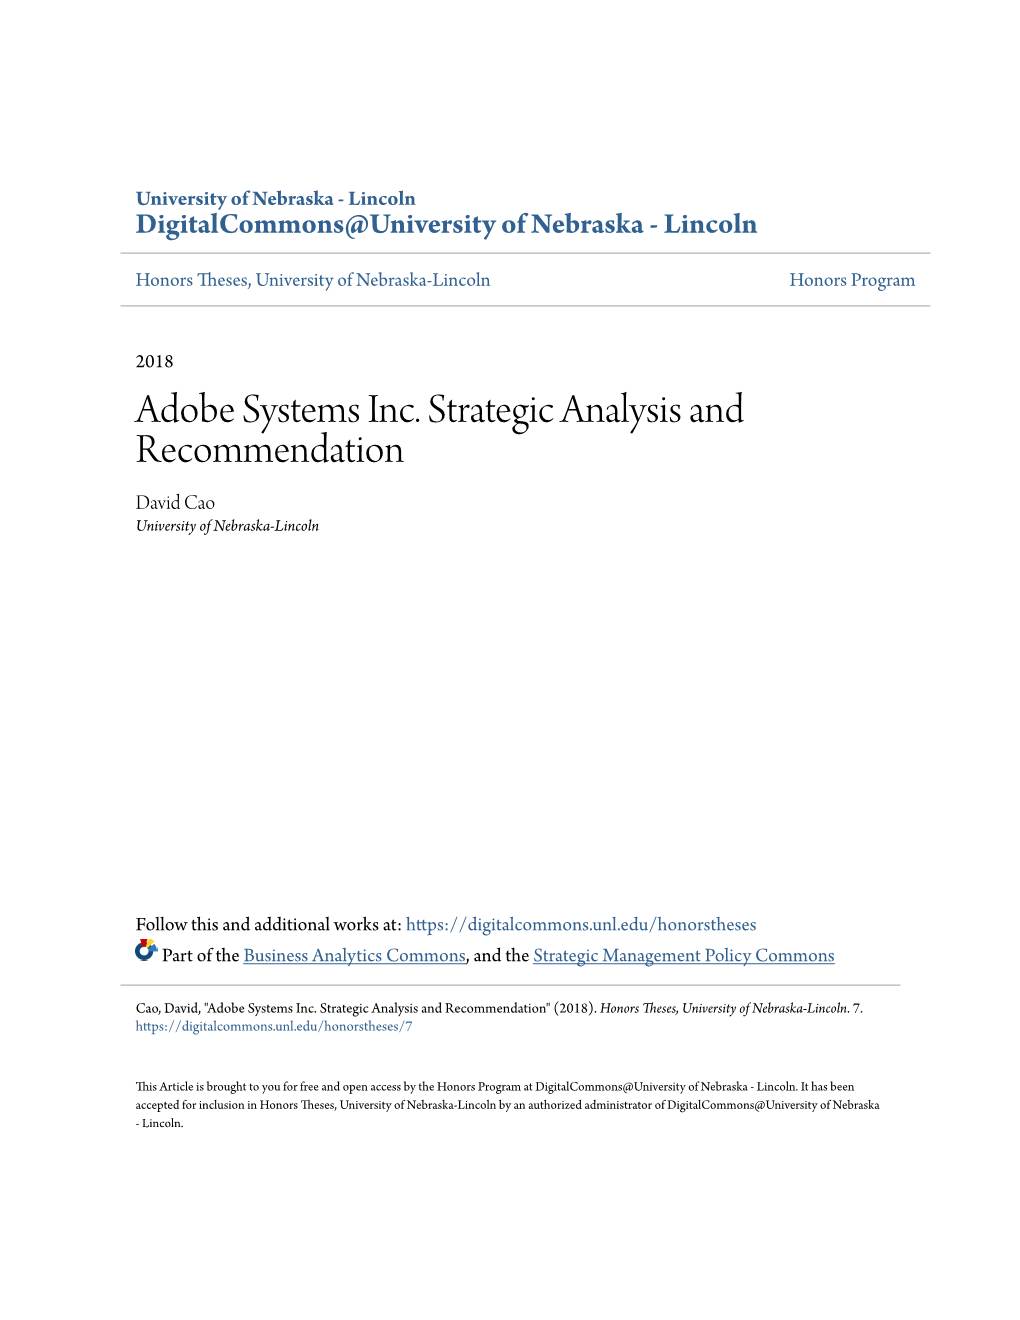 Adobe Systems Inc. Strategic Analysis and Recommendation David Cao University of Nebraska-Lincoln